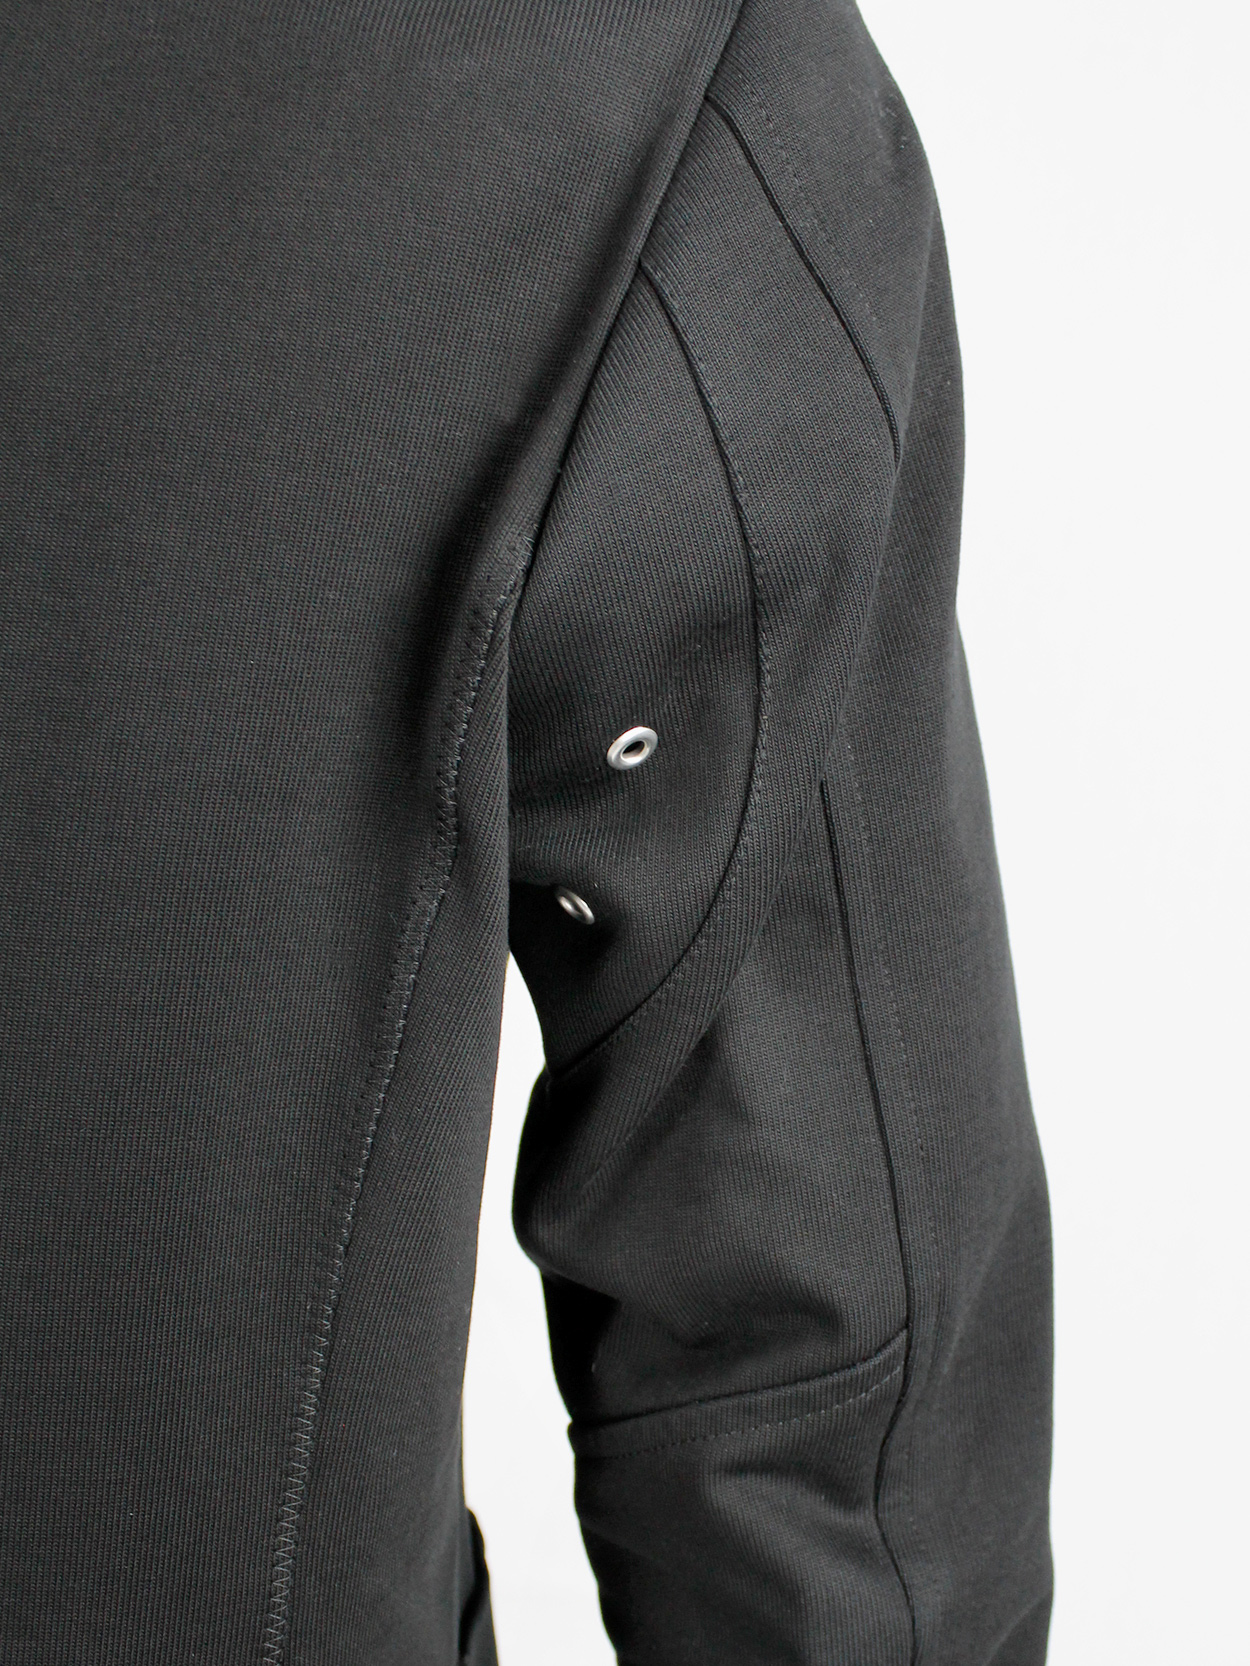 Junya Watanabe Man black blazer with biker details and panel stitching ...